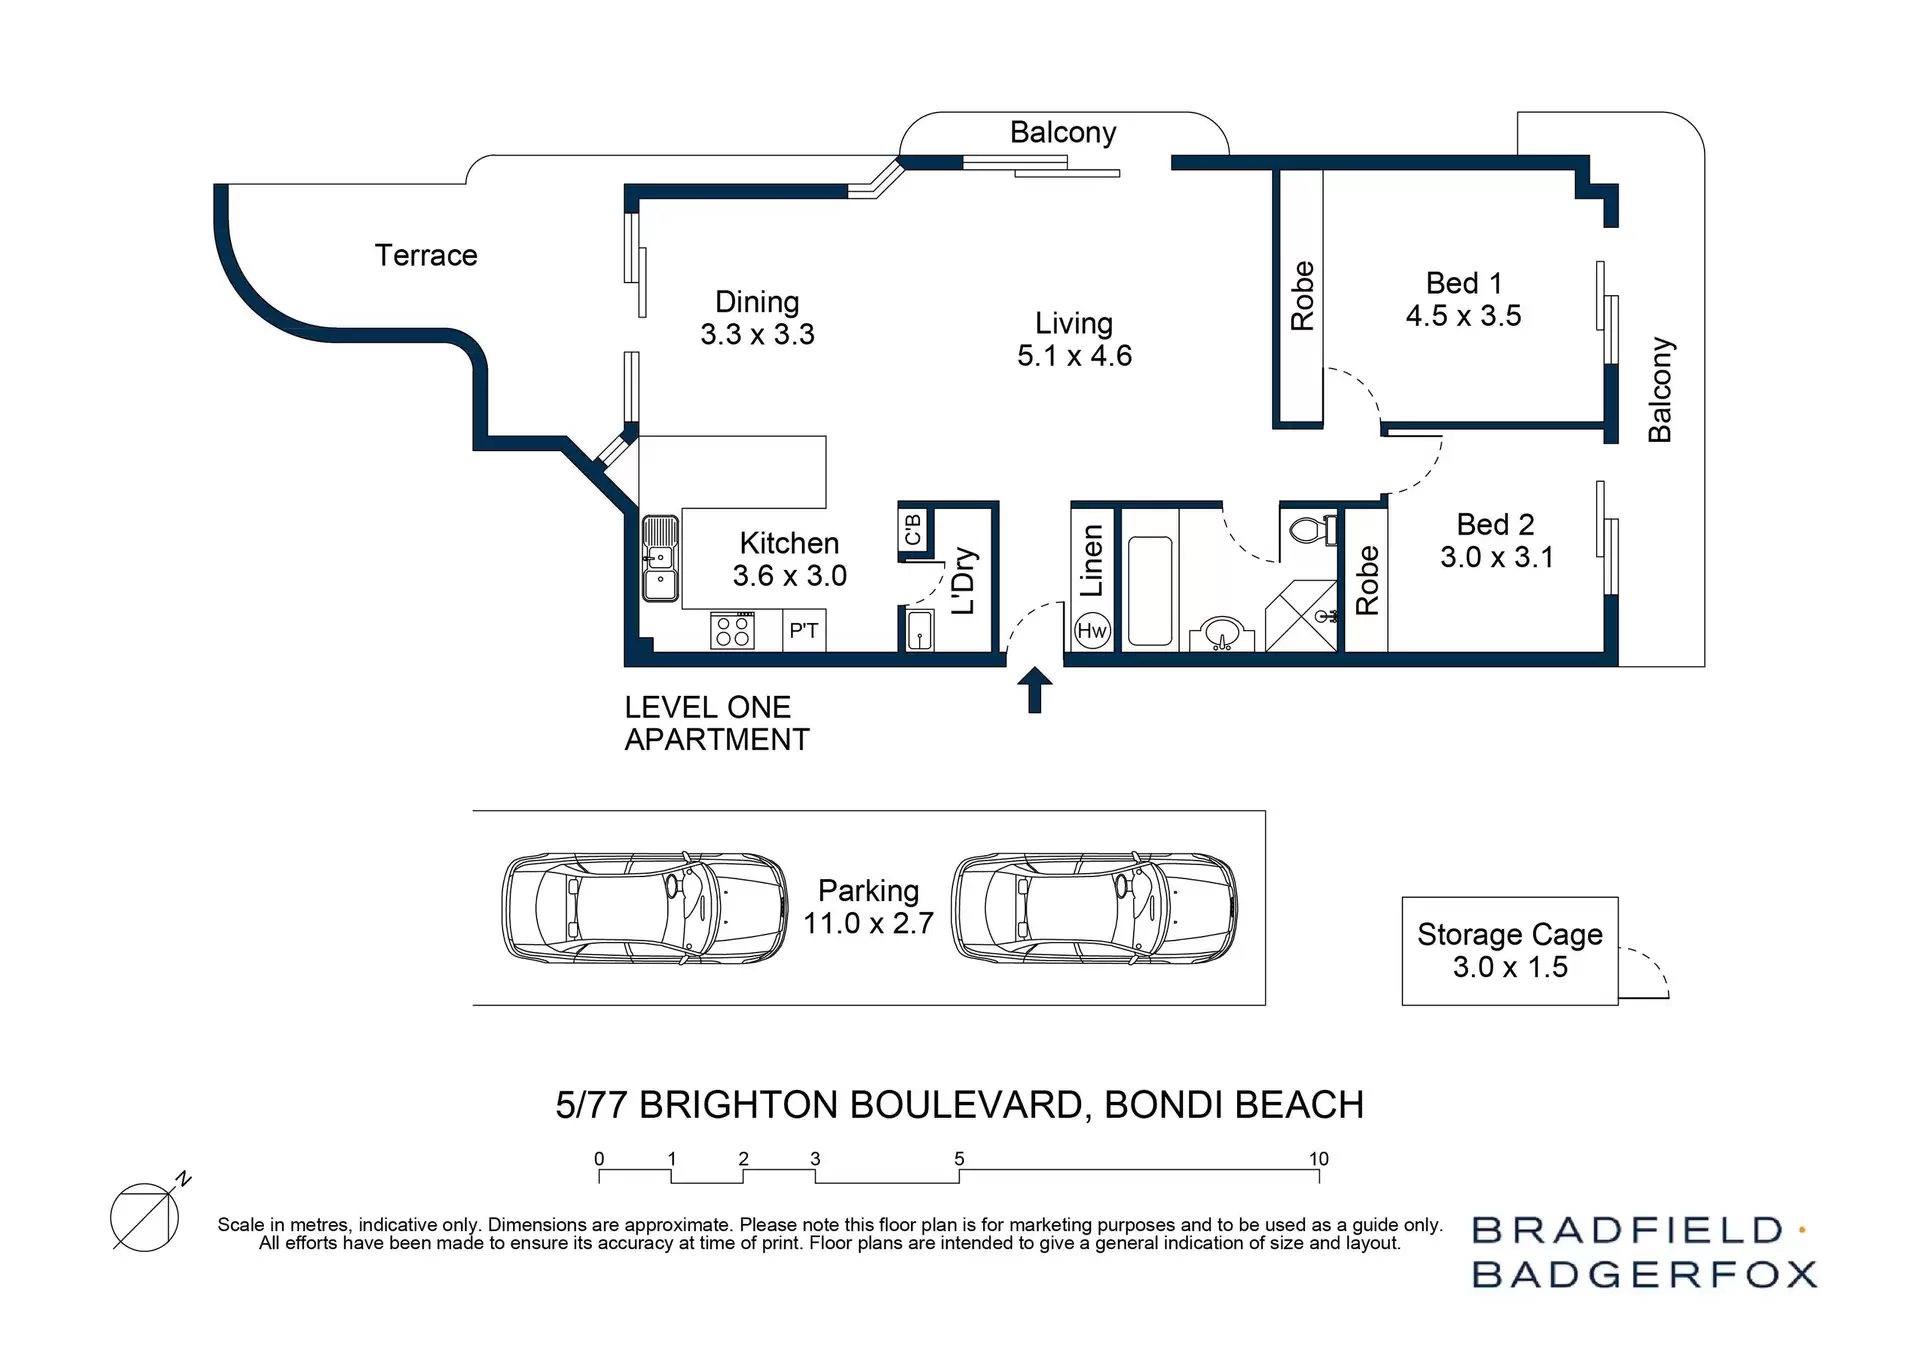 5/77 Brighton Boulevard, Bondi Beach Sold by Bradfield Badgerfox - image 1